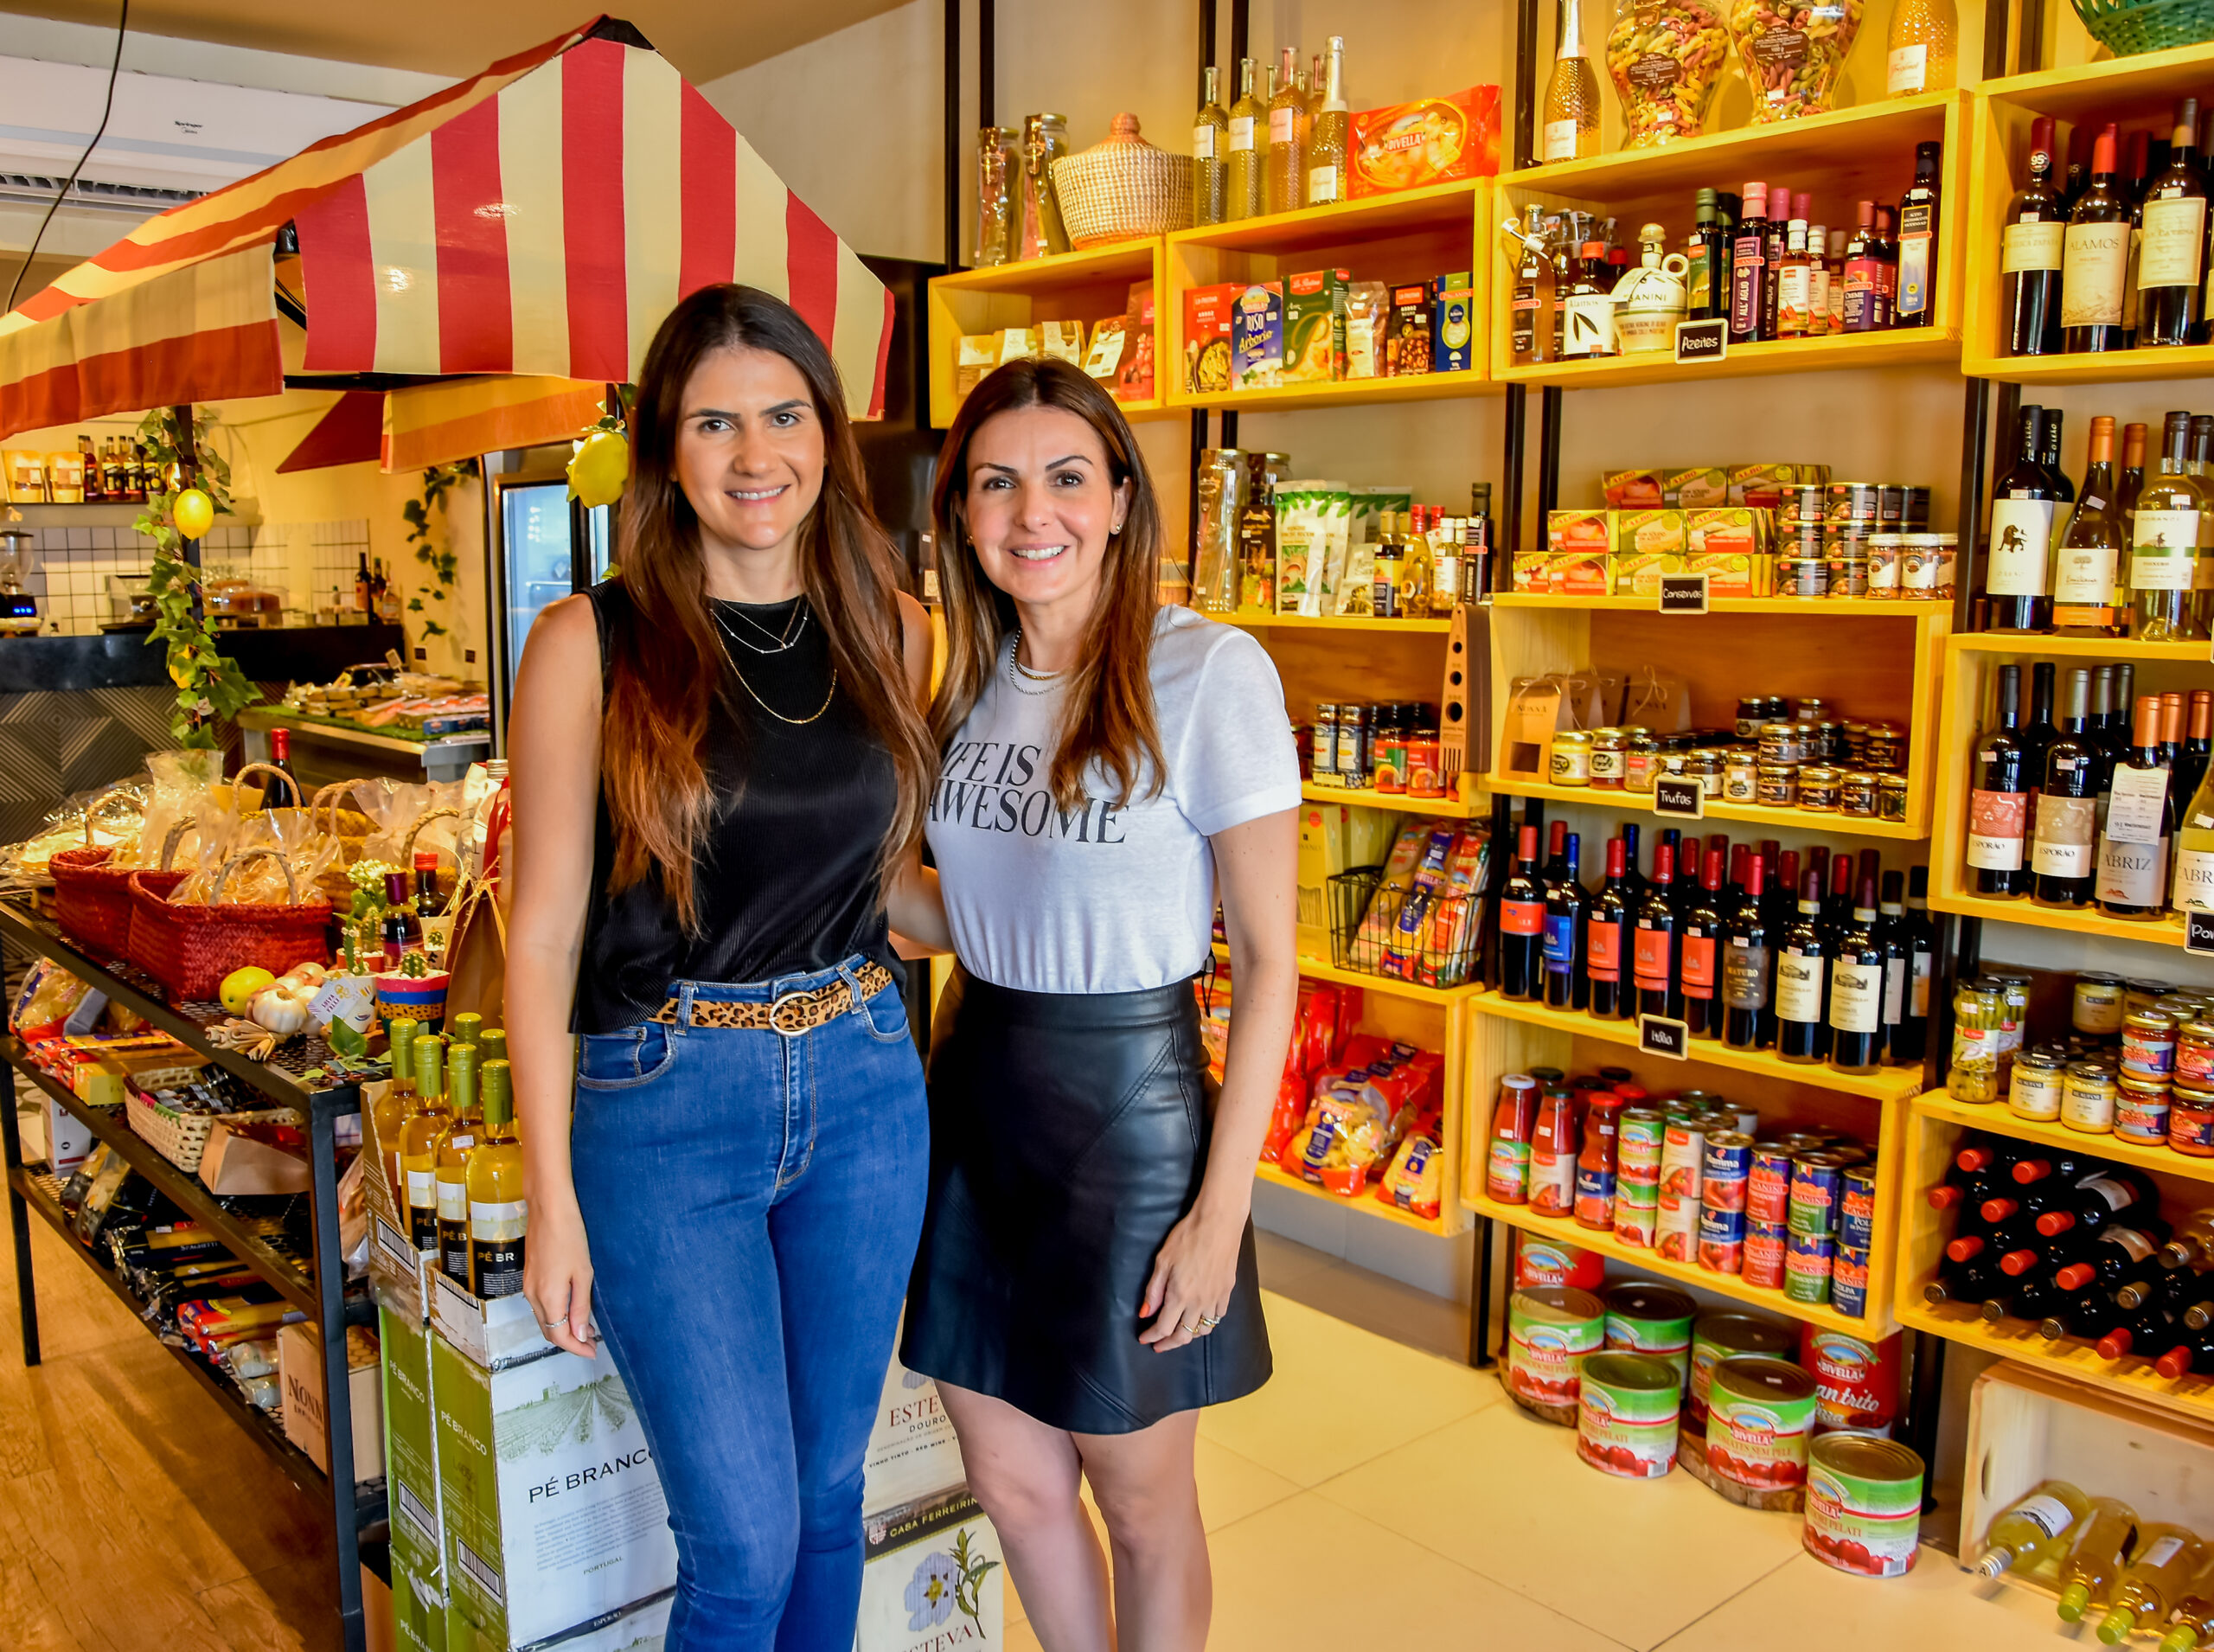 Nonna Empório Café oferece insumos da Itália para receitas caseiras